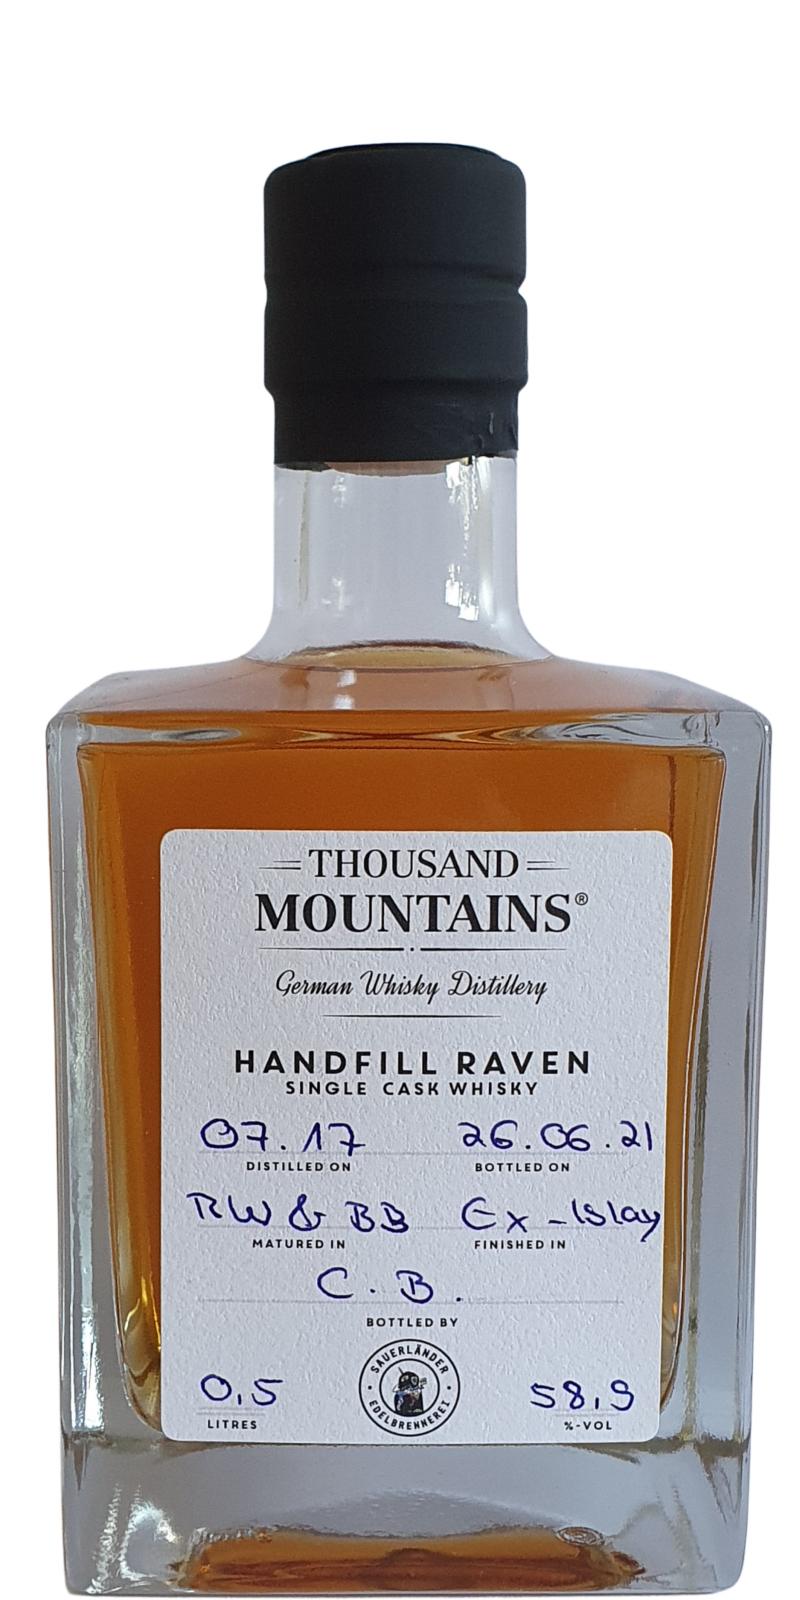 Thousand Mountains 2017 Handfill Raven Single Cask Whisky 58.9% 500ml